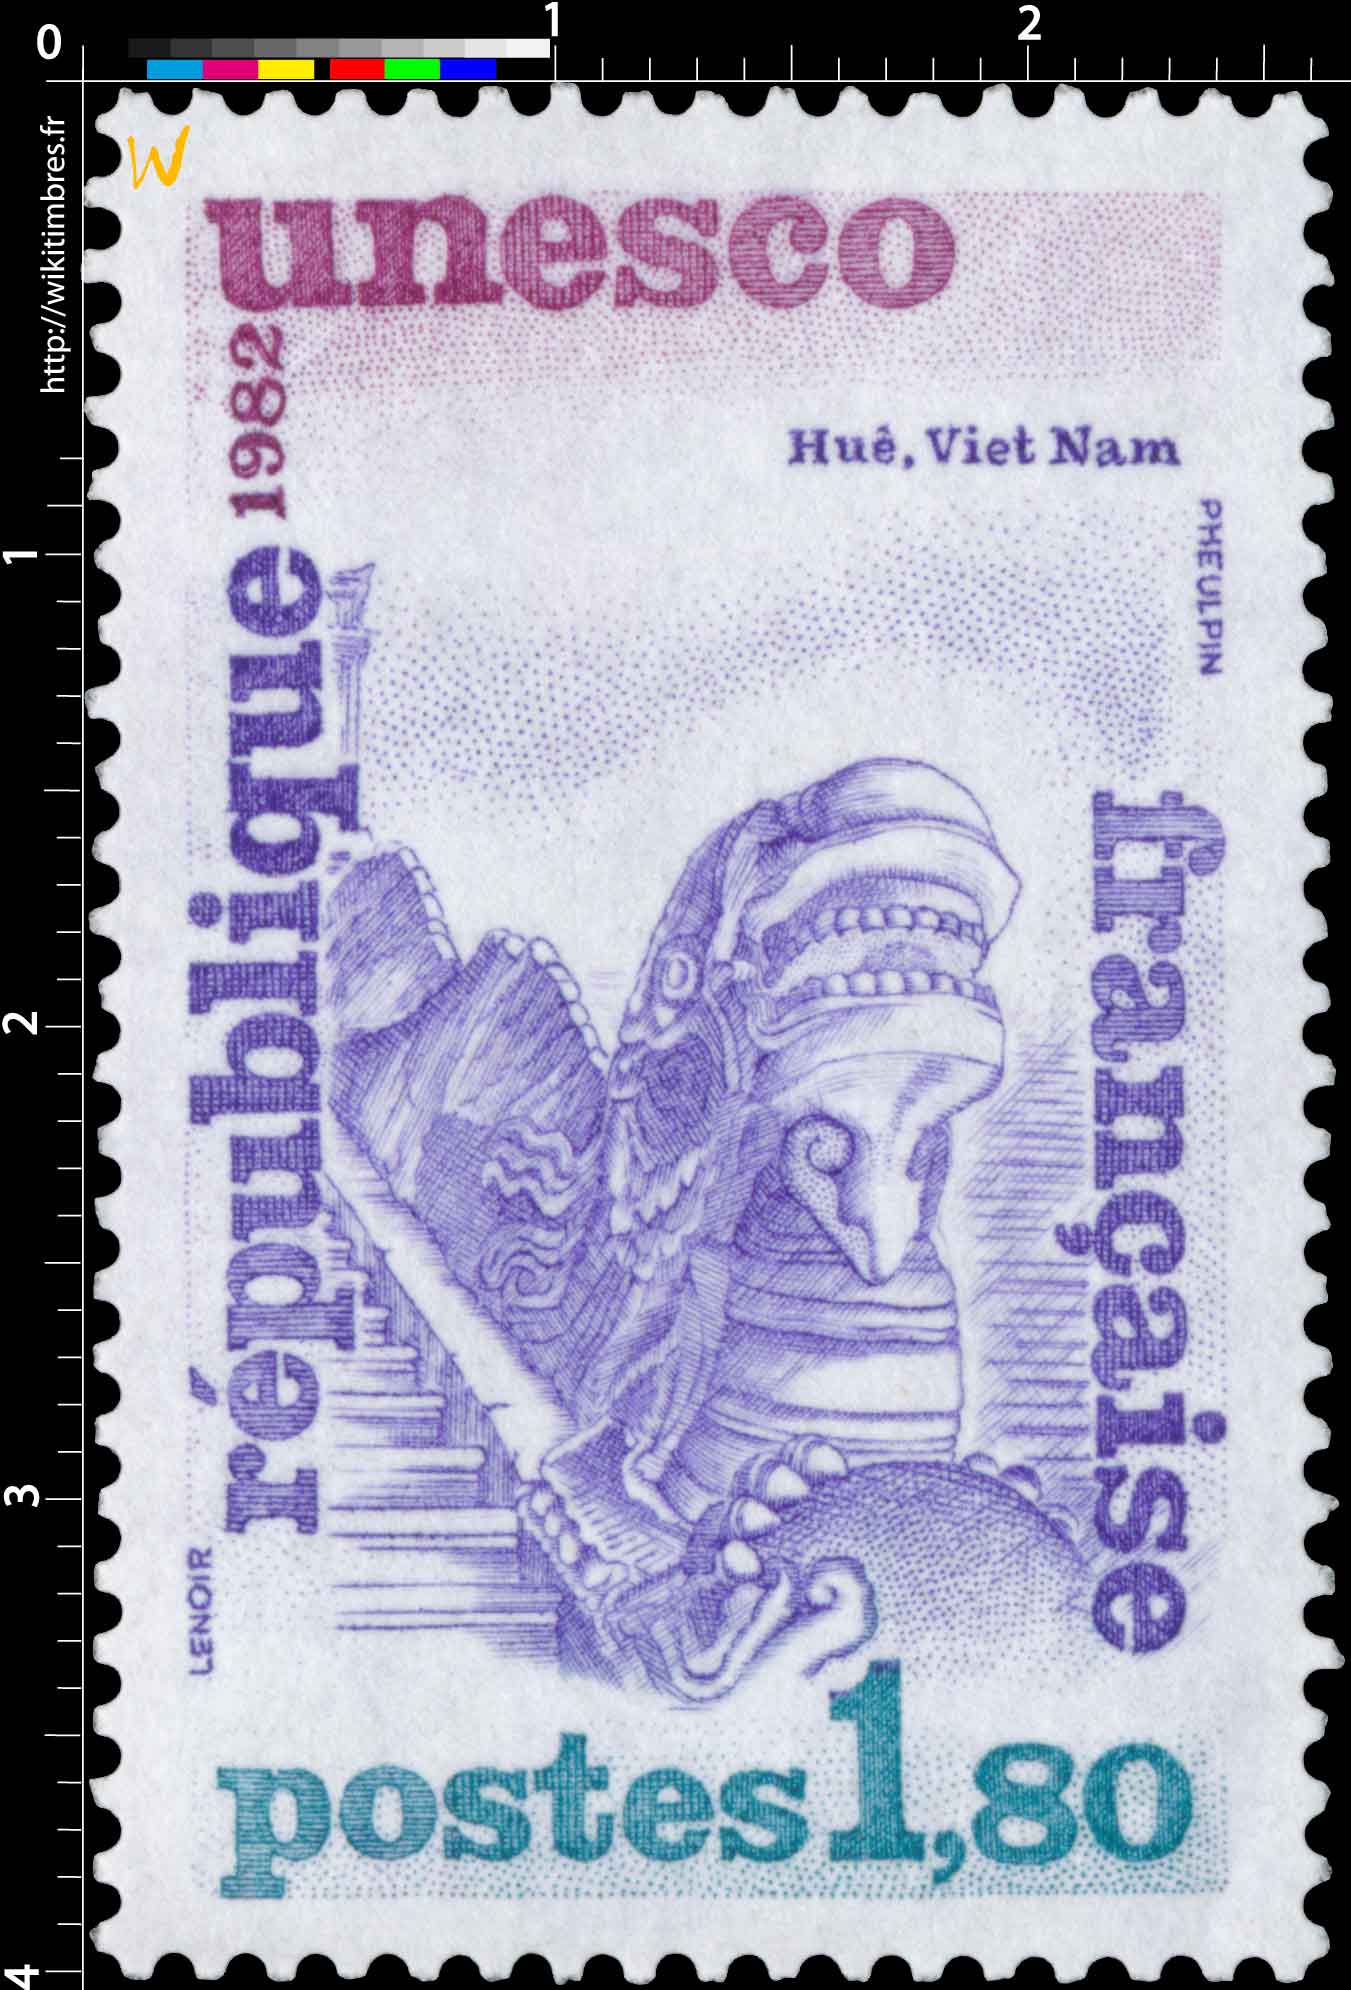 1982 Unesco Huê, Viet Nam.